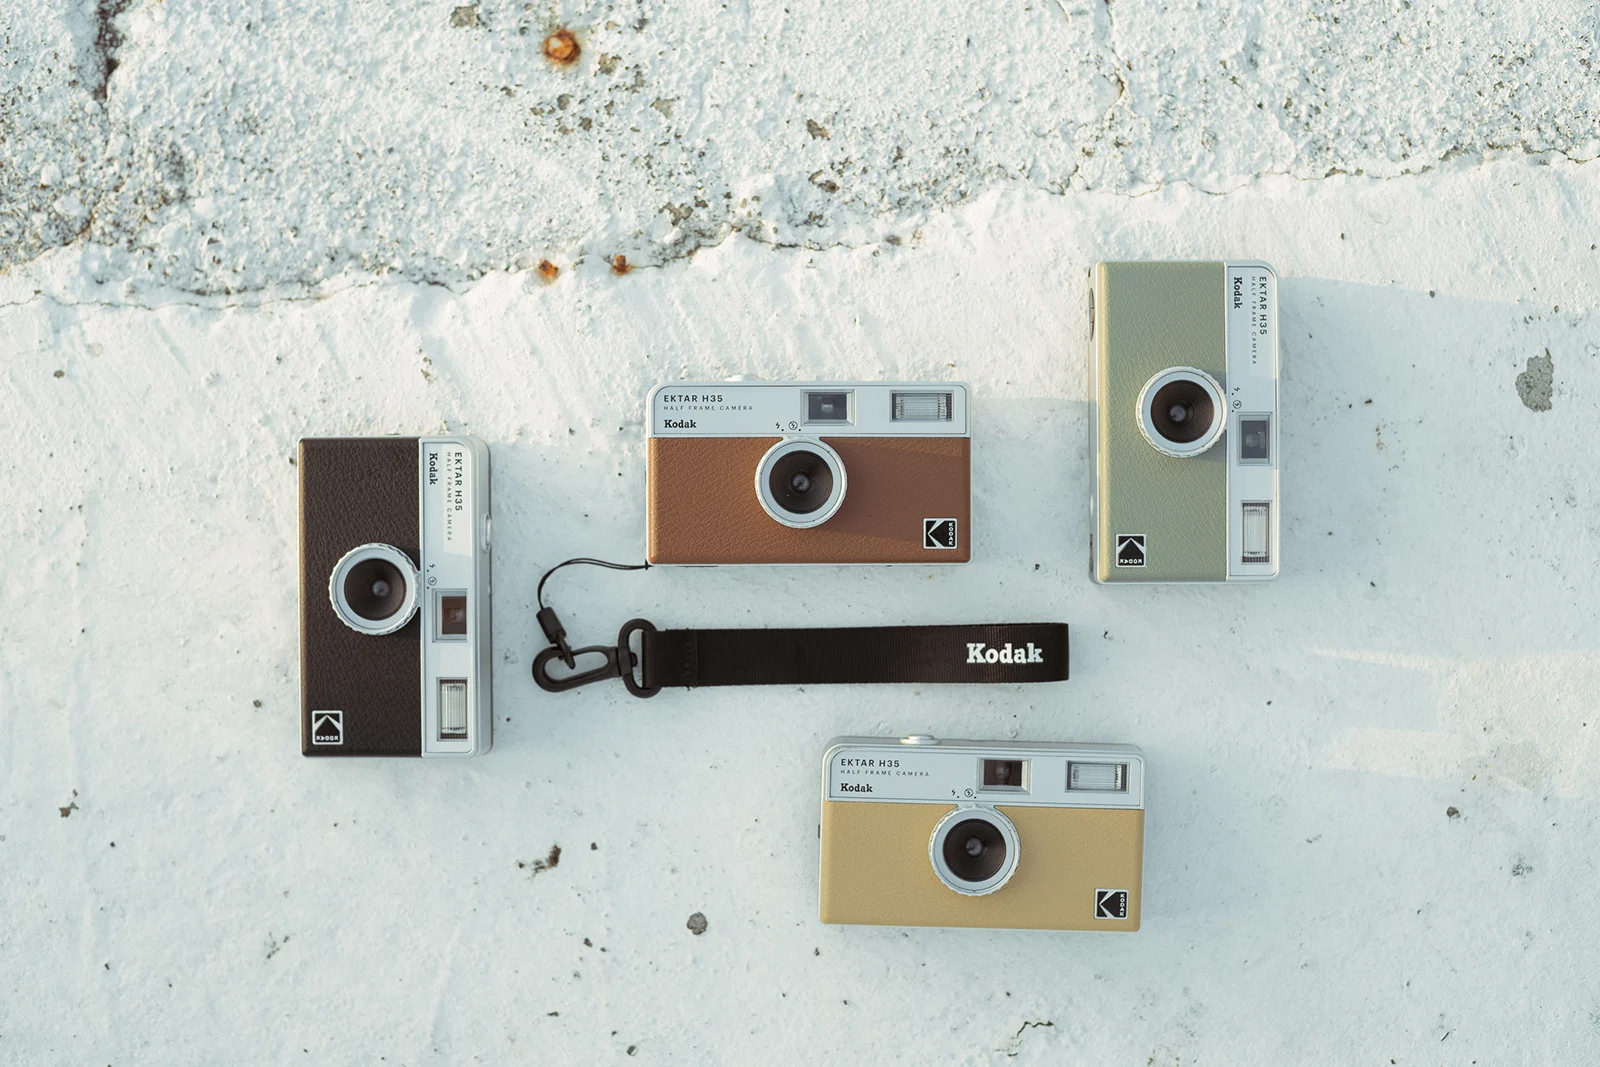 Reto Unveils the Kodak Ektar H35 Film Camera - Exibart Street